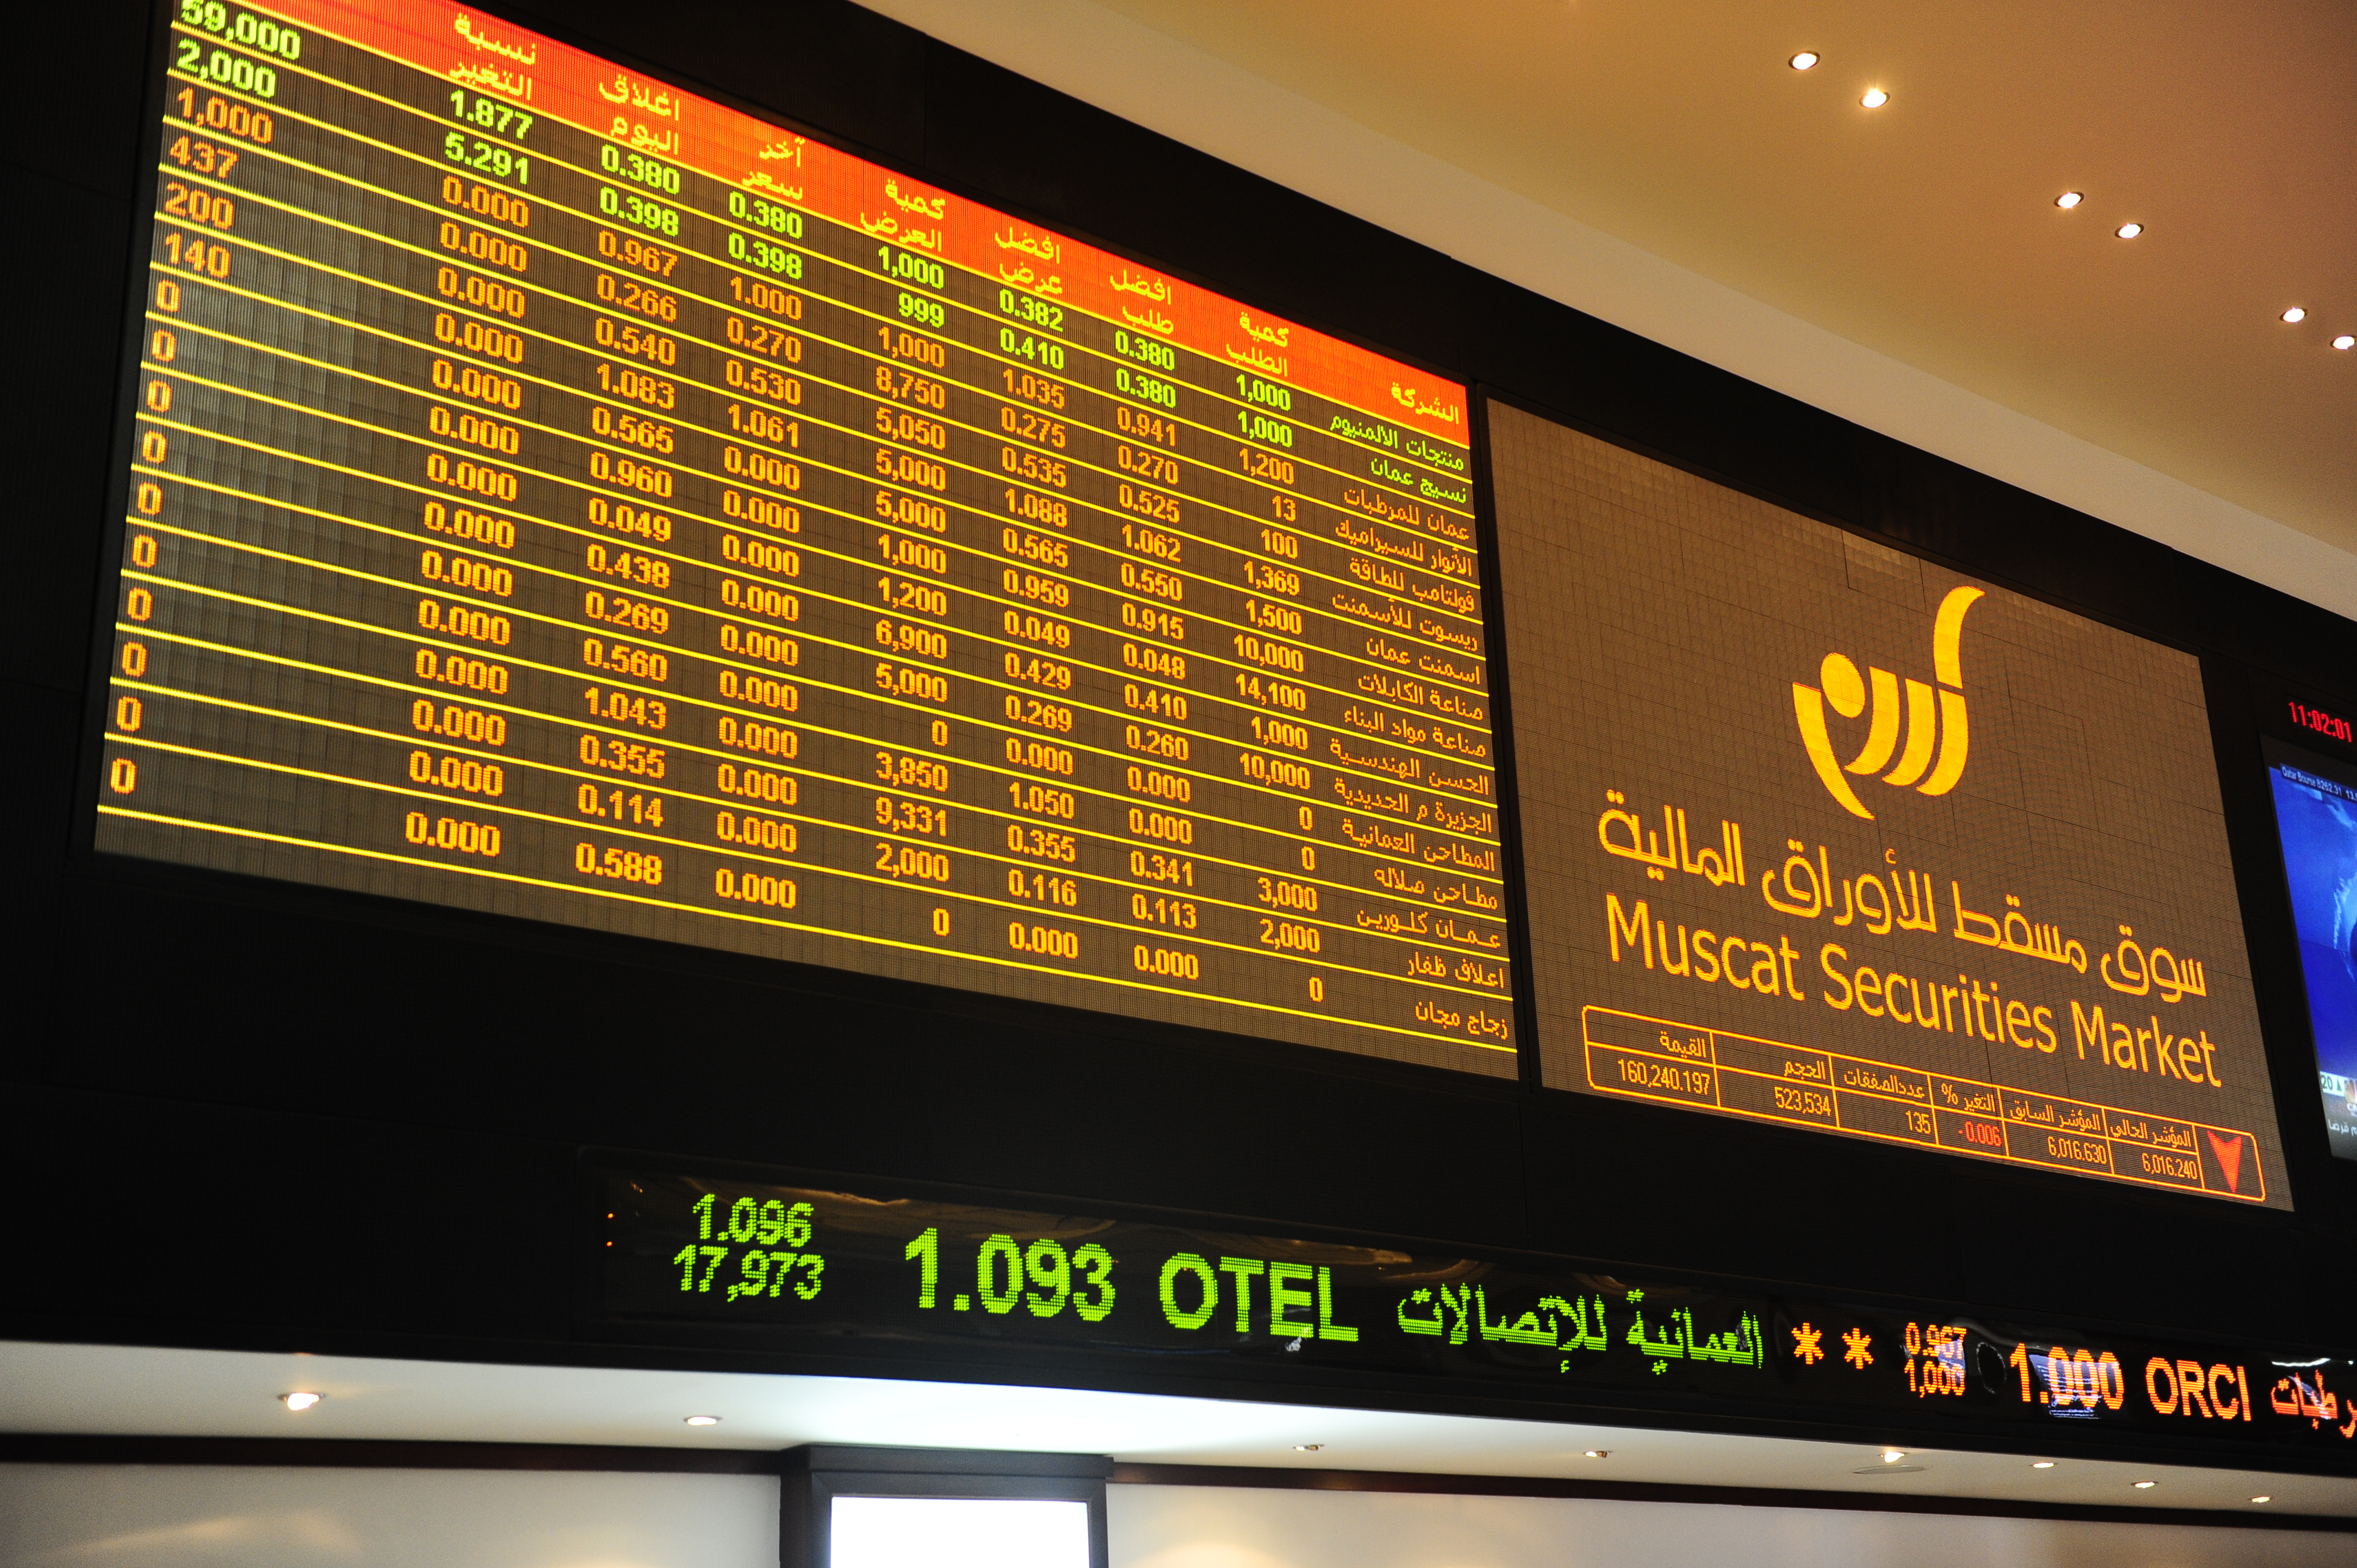 Weak market sentiment drags Oman shares lower